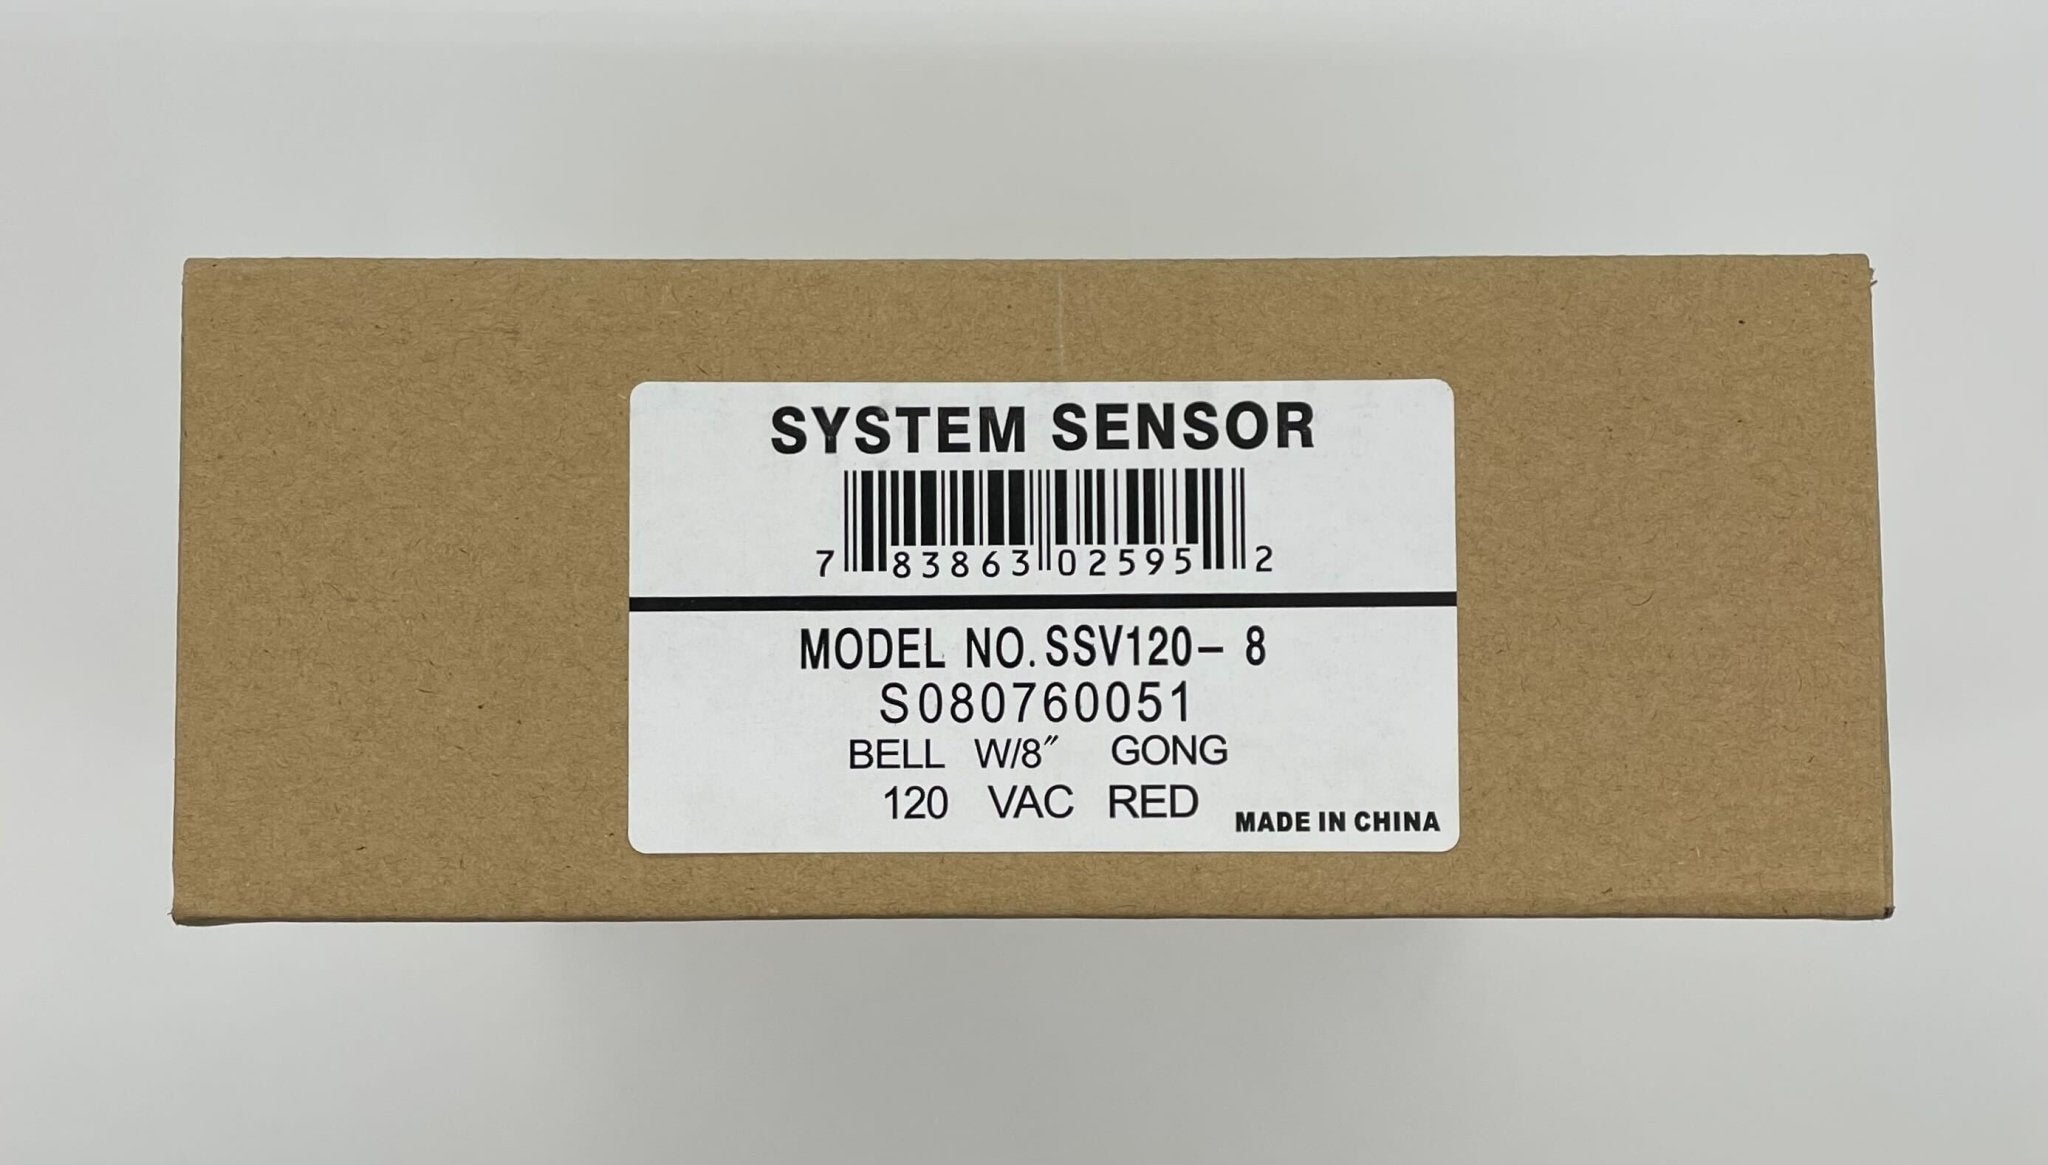 System Sensor SSV120-8 - The Fire Alarm Supplier